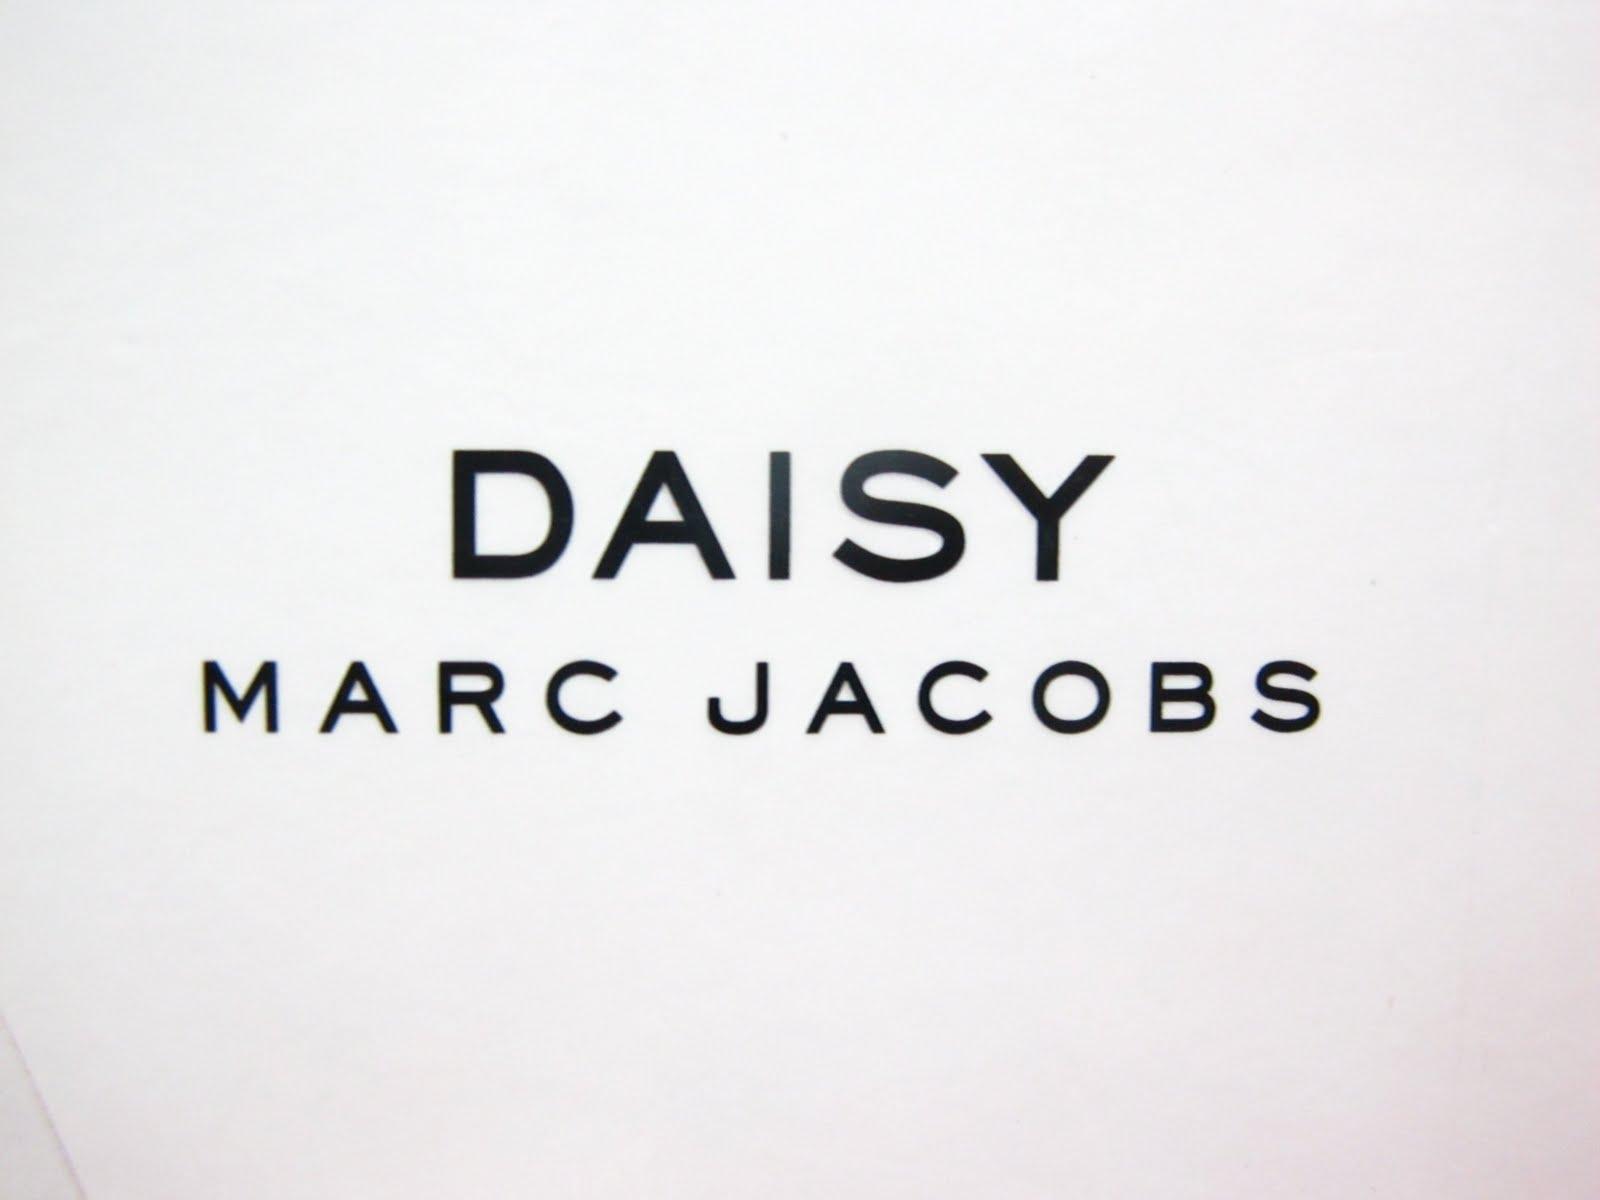 Marc Jacobs Logo - Daisy marc jacobs Logos